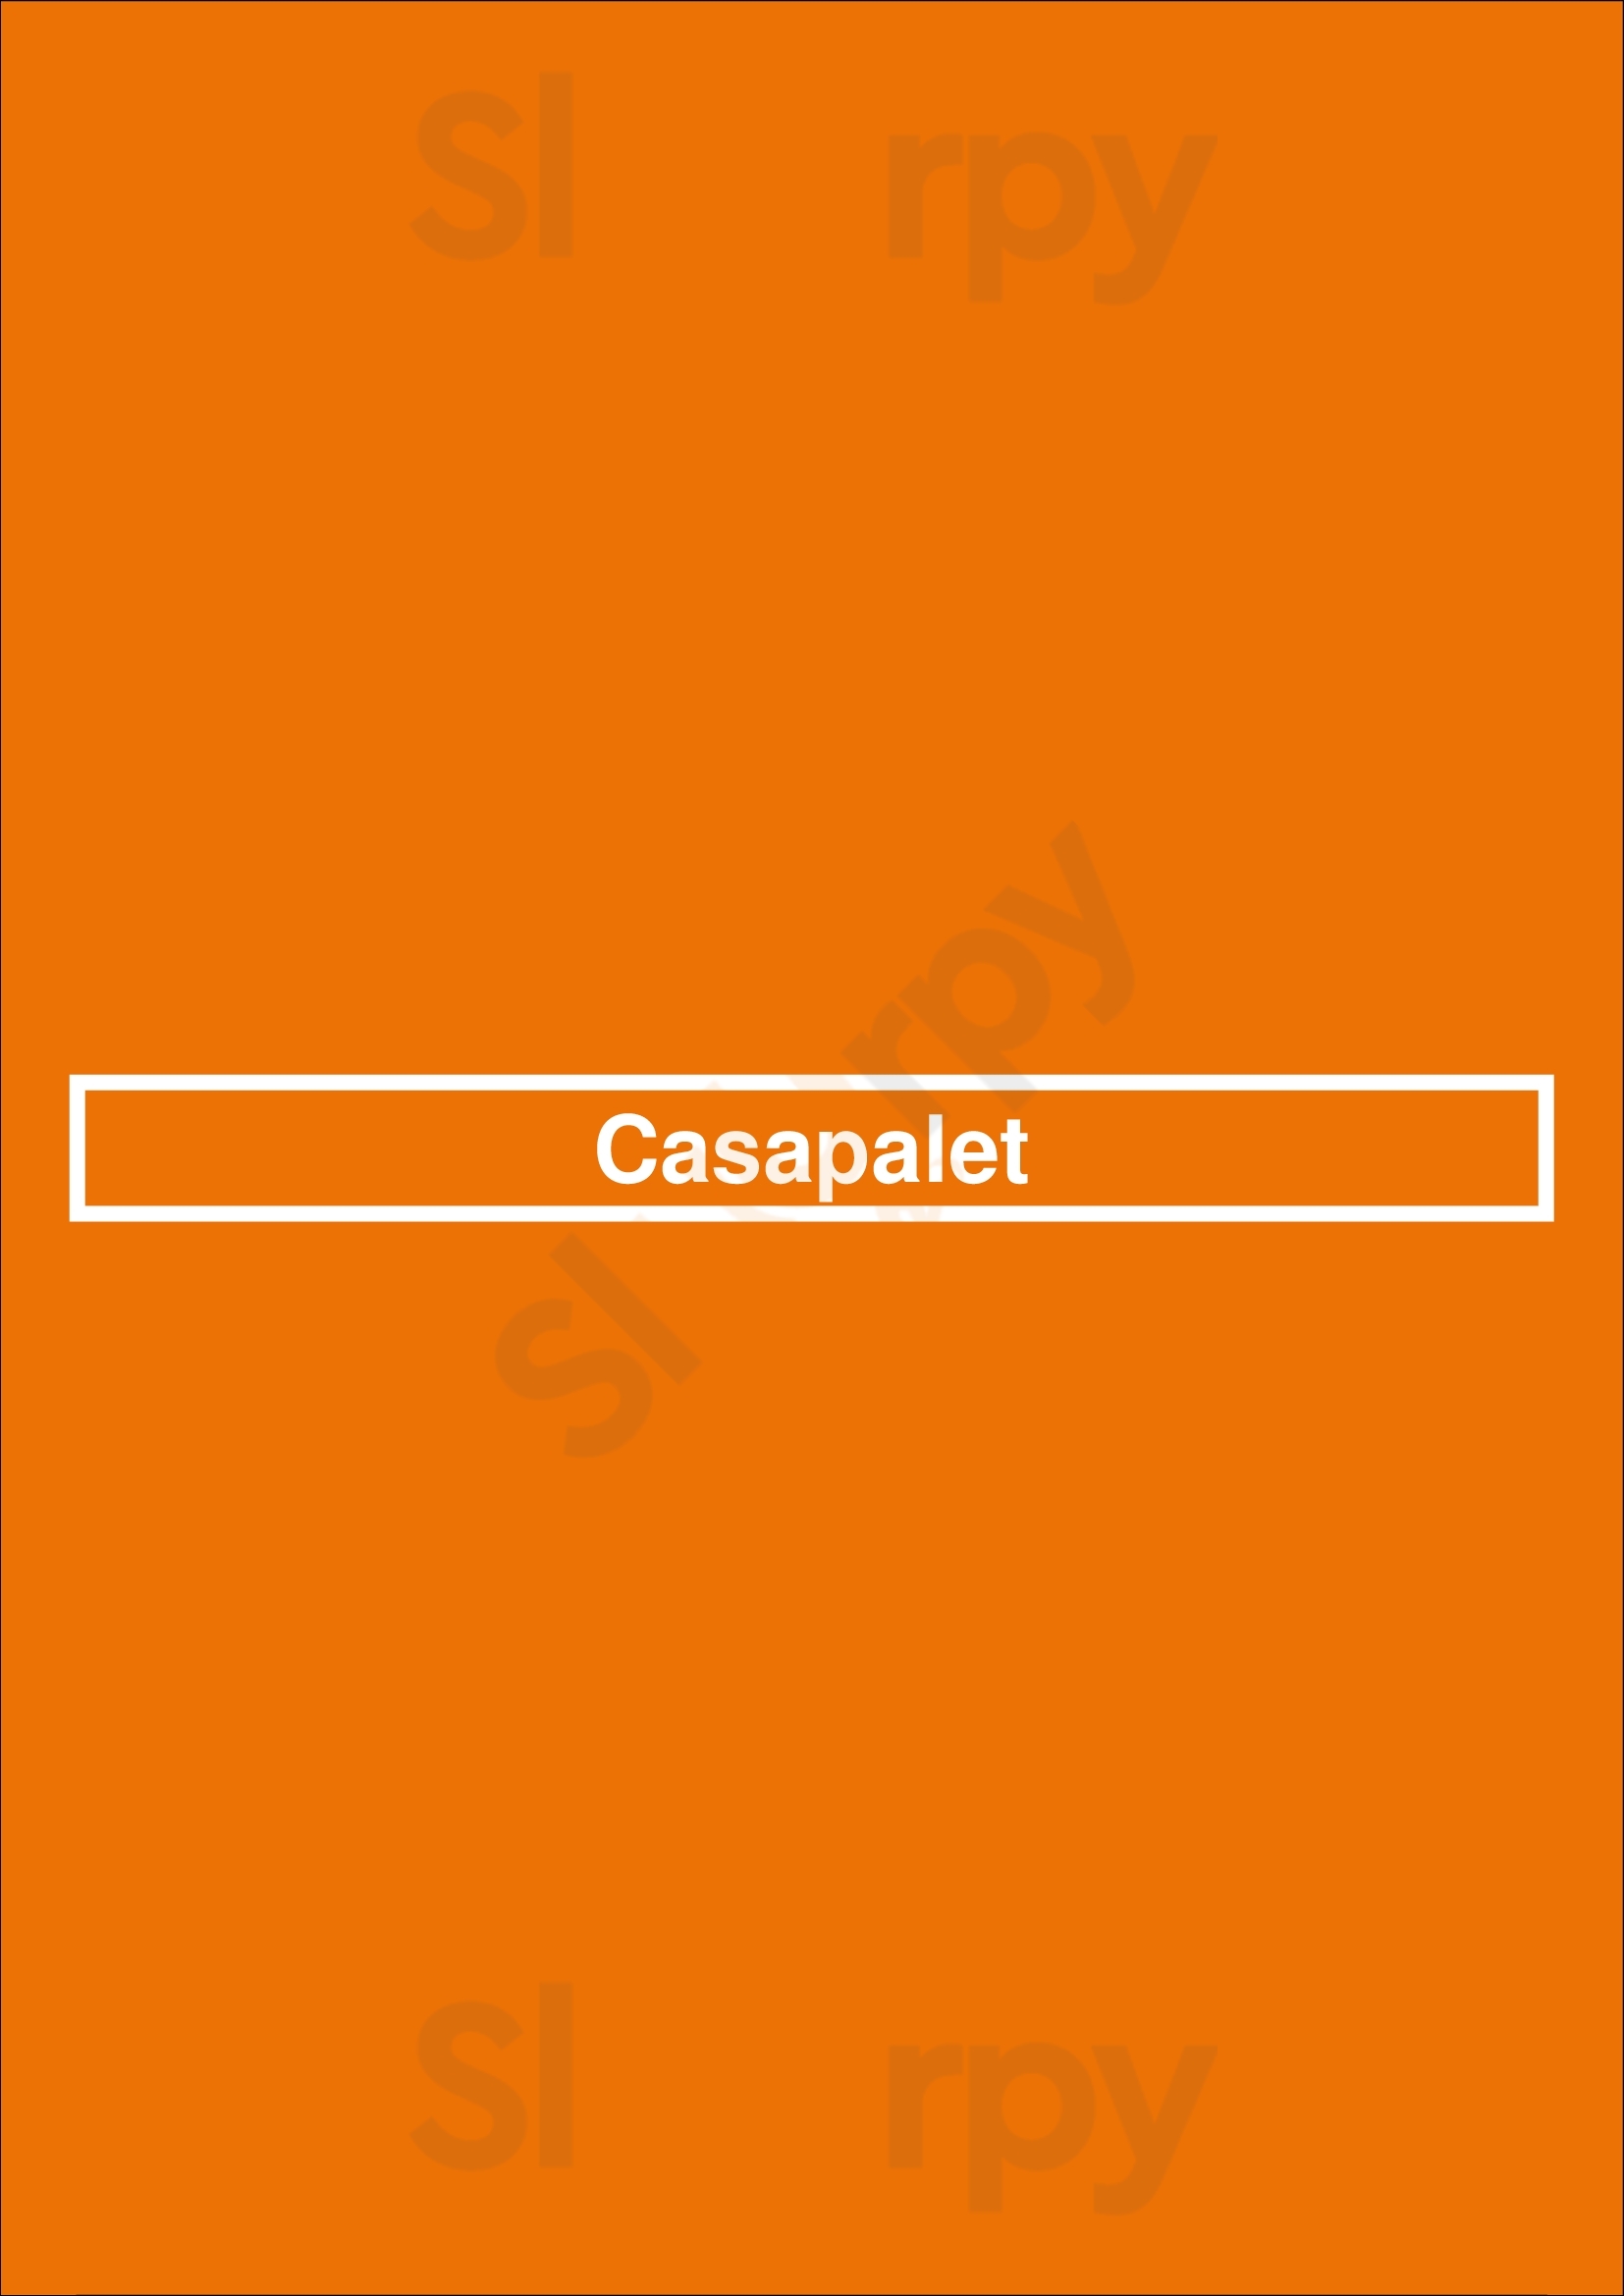 Casapalet Barcelona Menu - 1